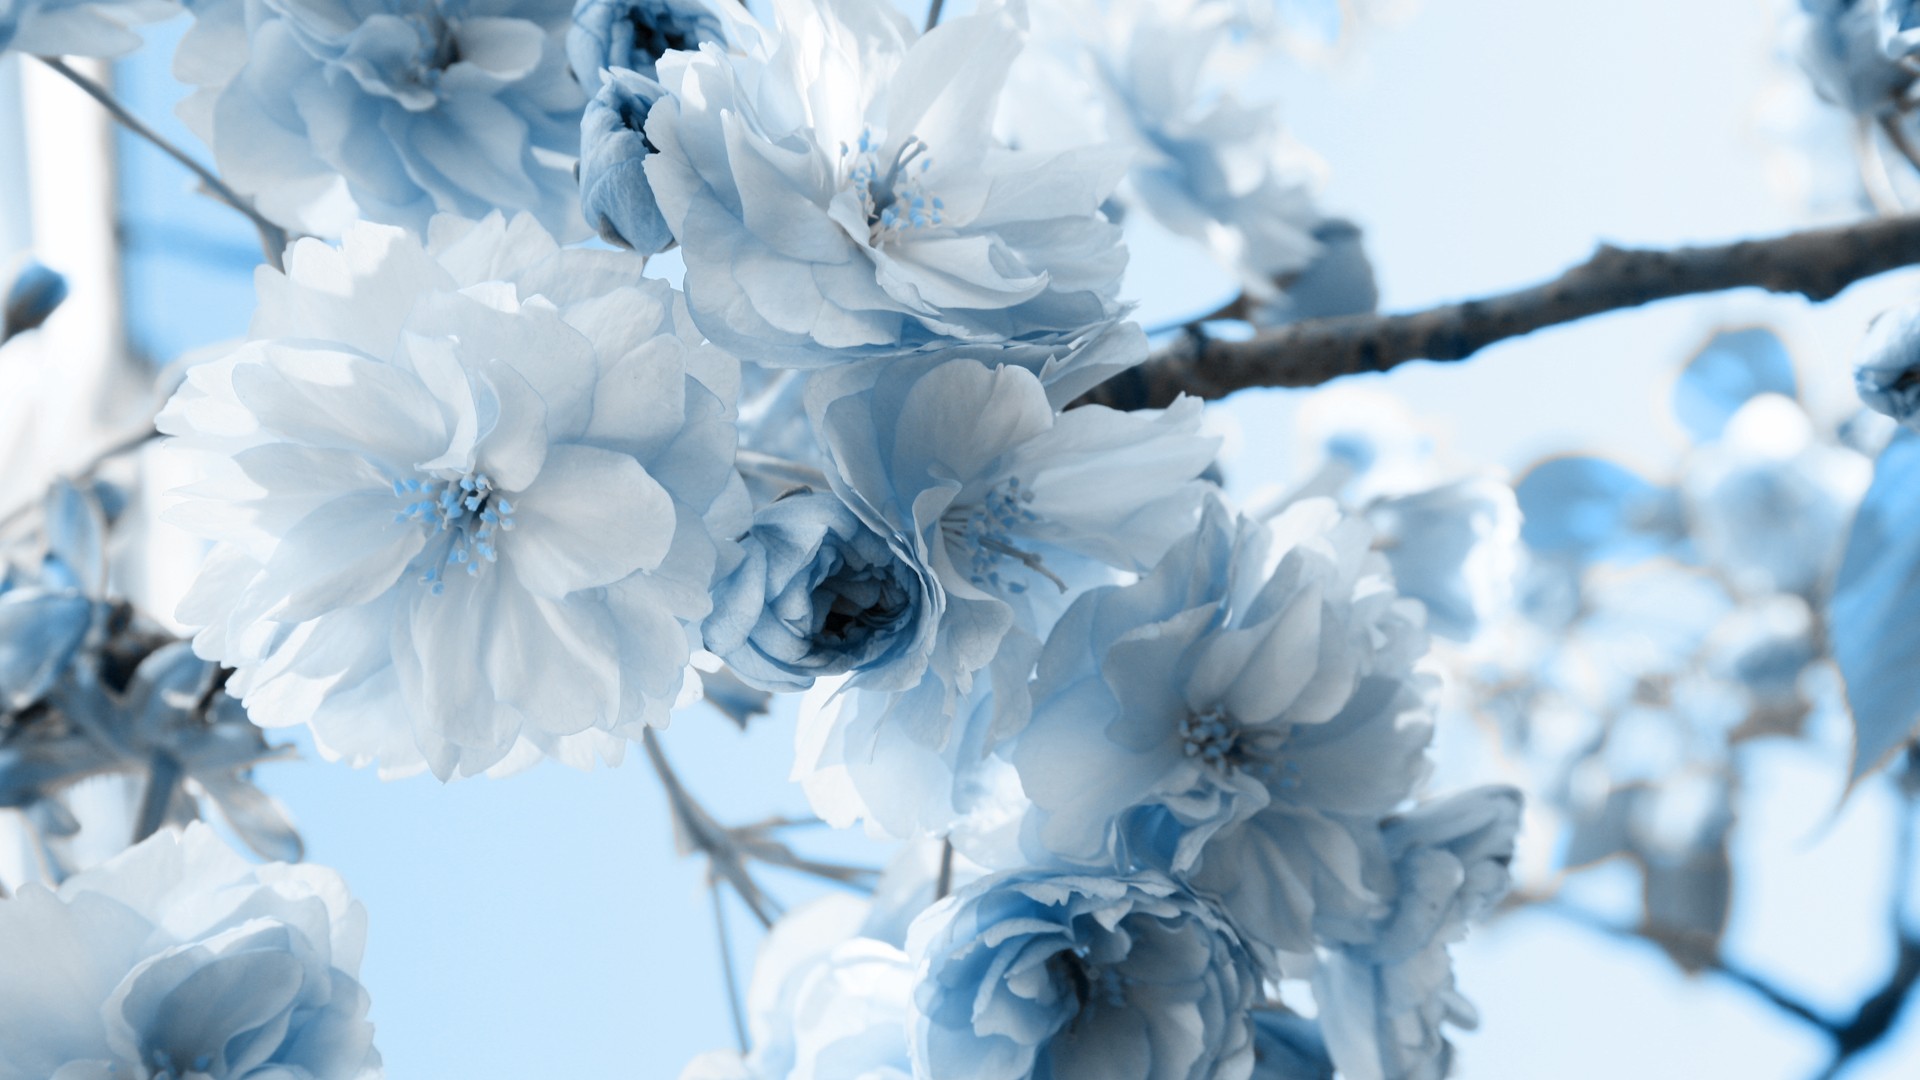 Blue Wallpaper with White Flowers - WallpaperSafari